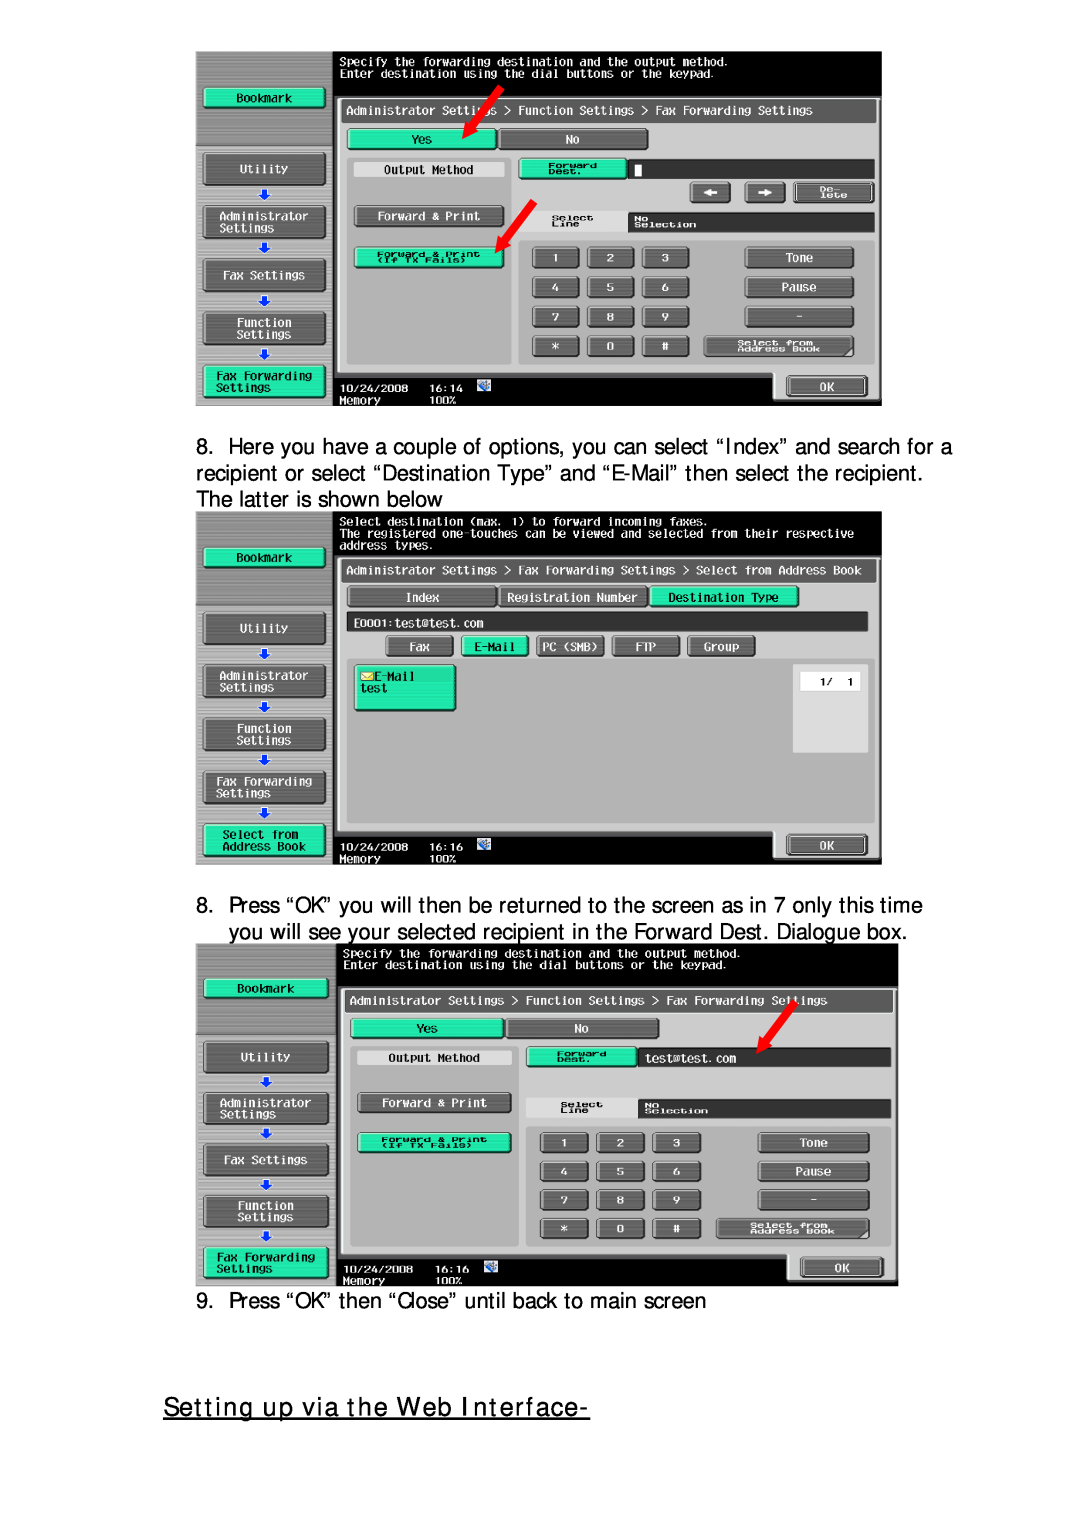 Konica Minolta C351, 650, 361/421/501, 420/500, 550, 250/350, 253, 600/750, 451 manual Setting up via the Web Interface 